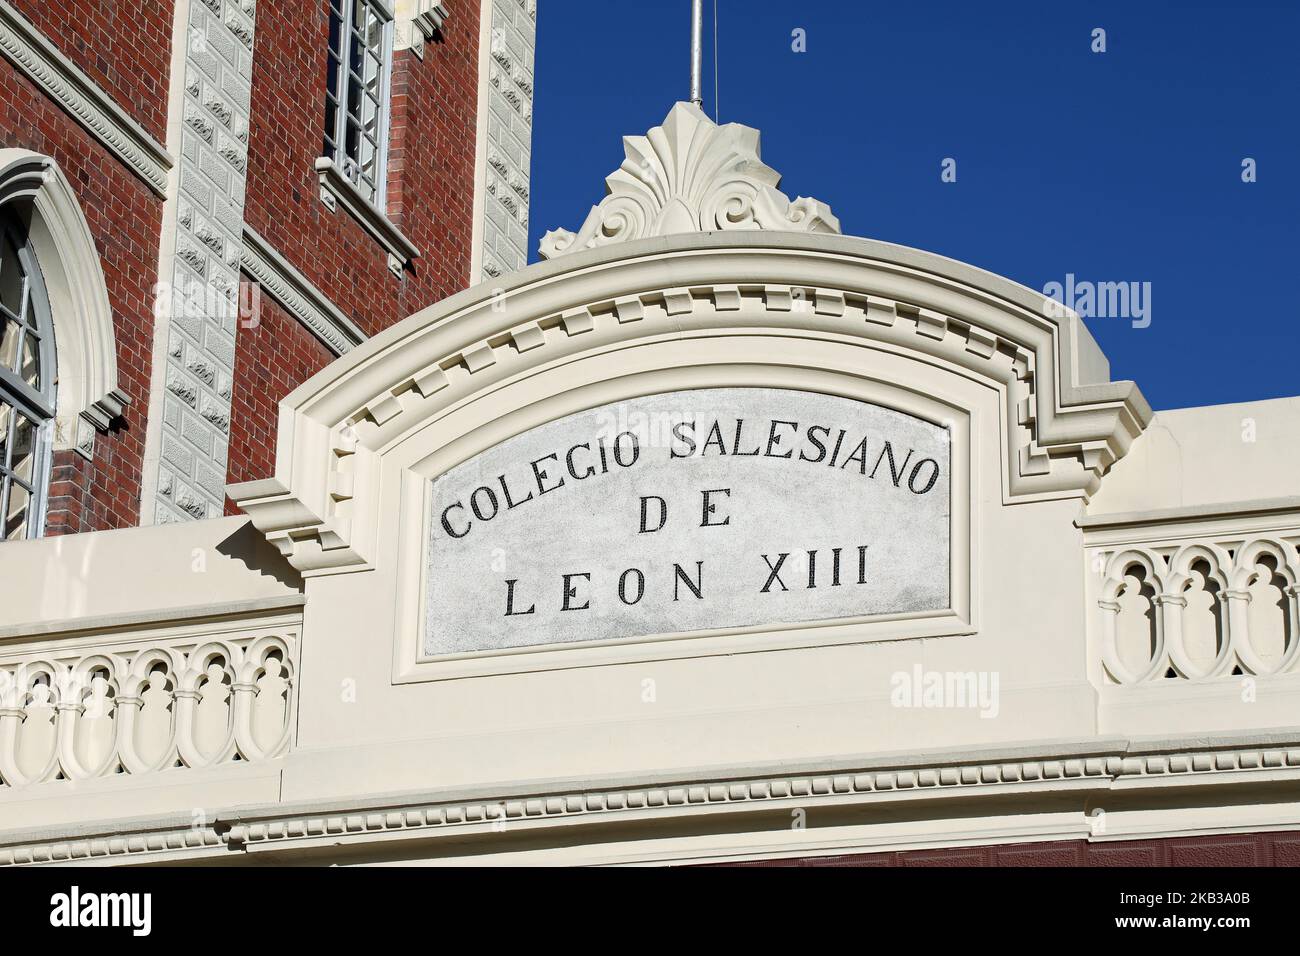 Colegio Salesiano de Leon XIII in Bogota Stock Photo